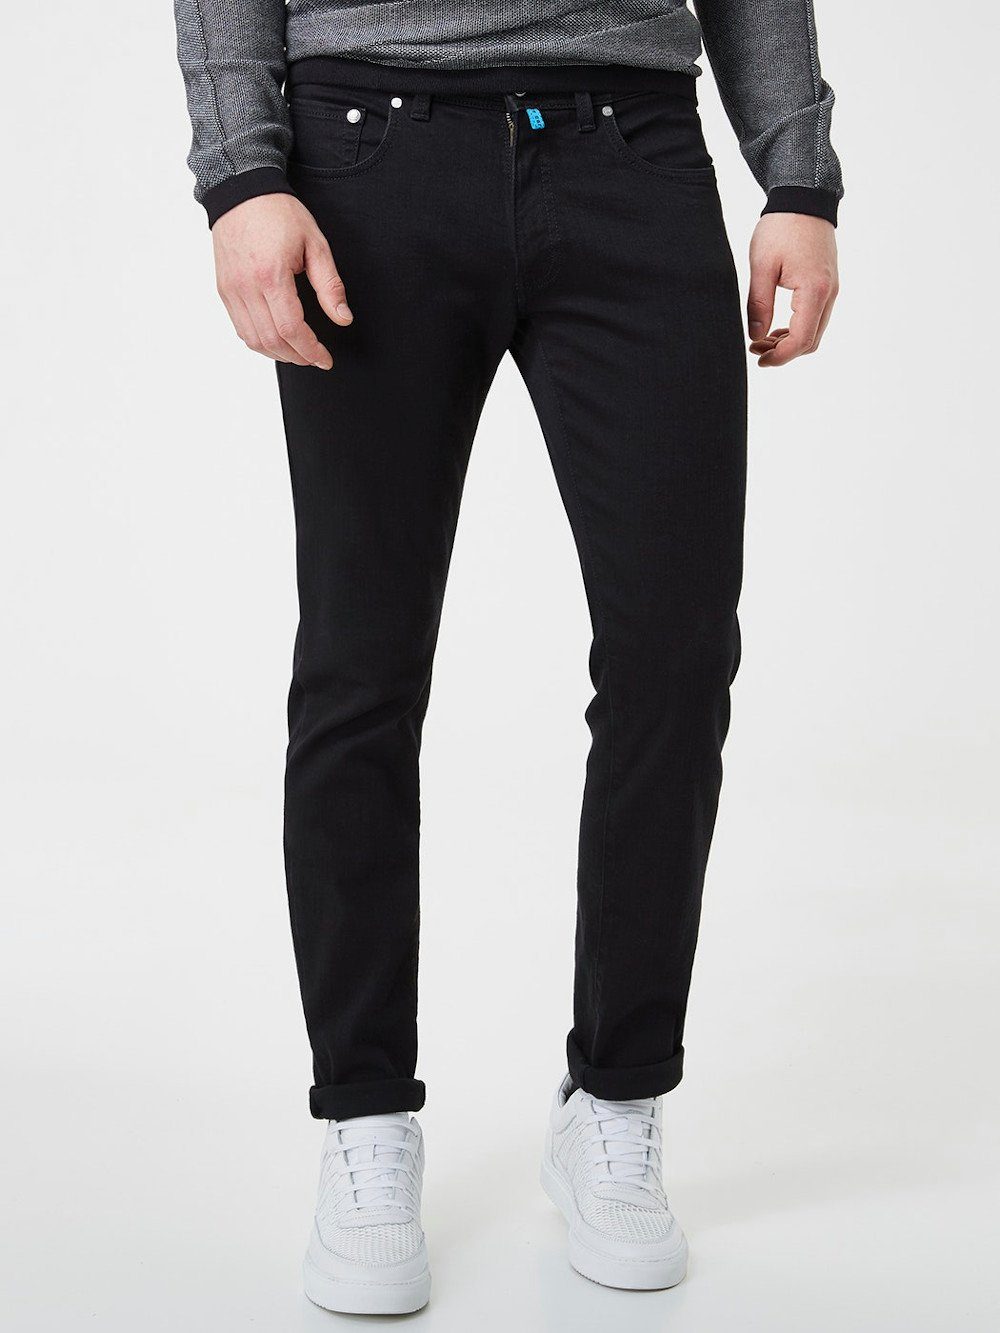 إزعاج المؤهل خنزير صغير قصب غيتار أخضر pierre cardin future flex jeans  super elastisch tapered fit lyon - speedy-detail.com